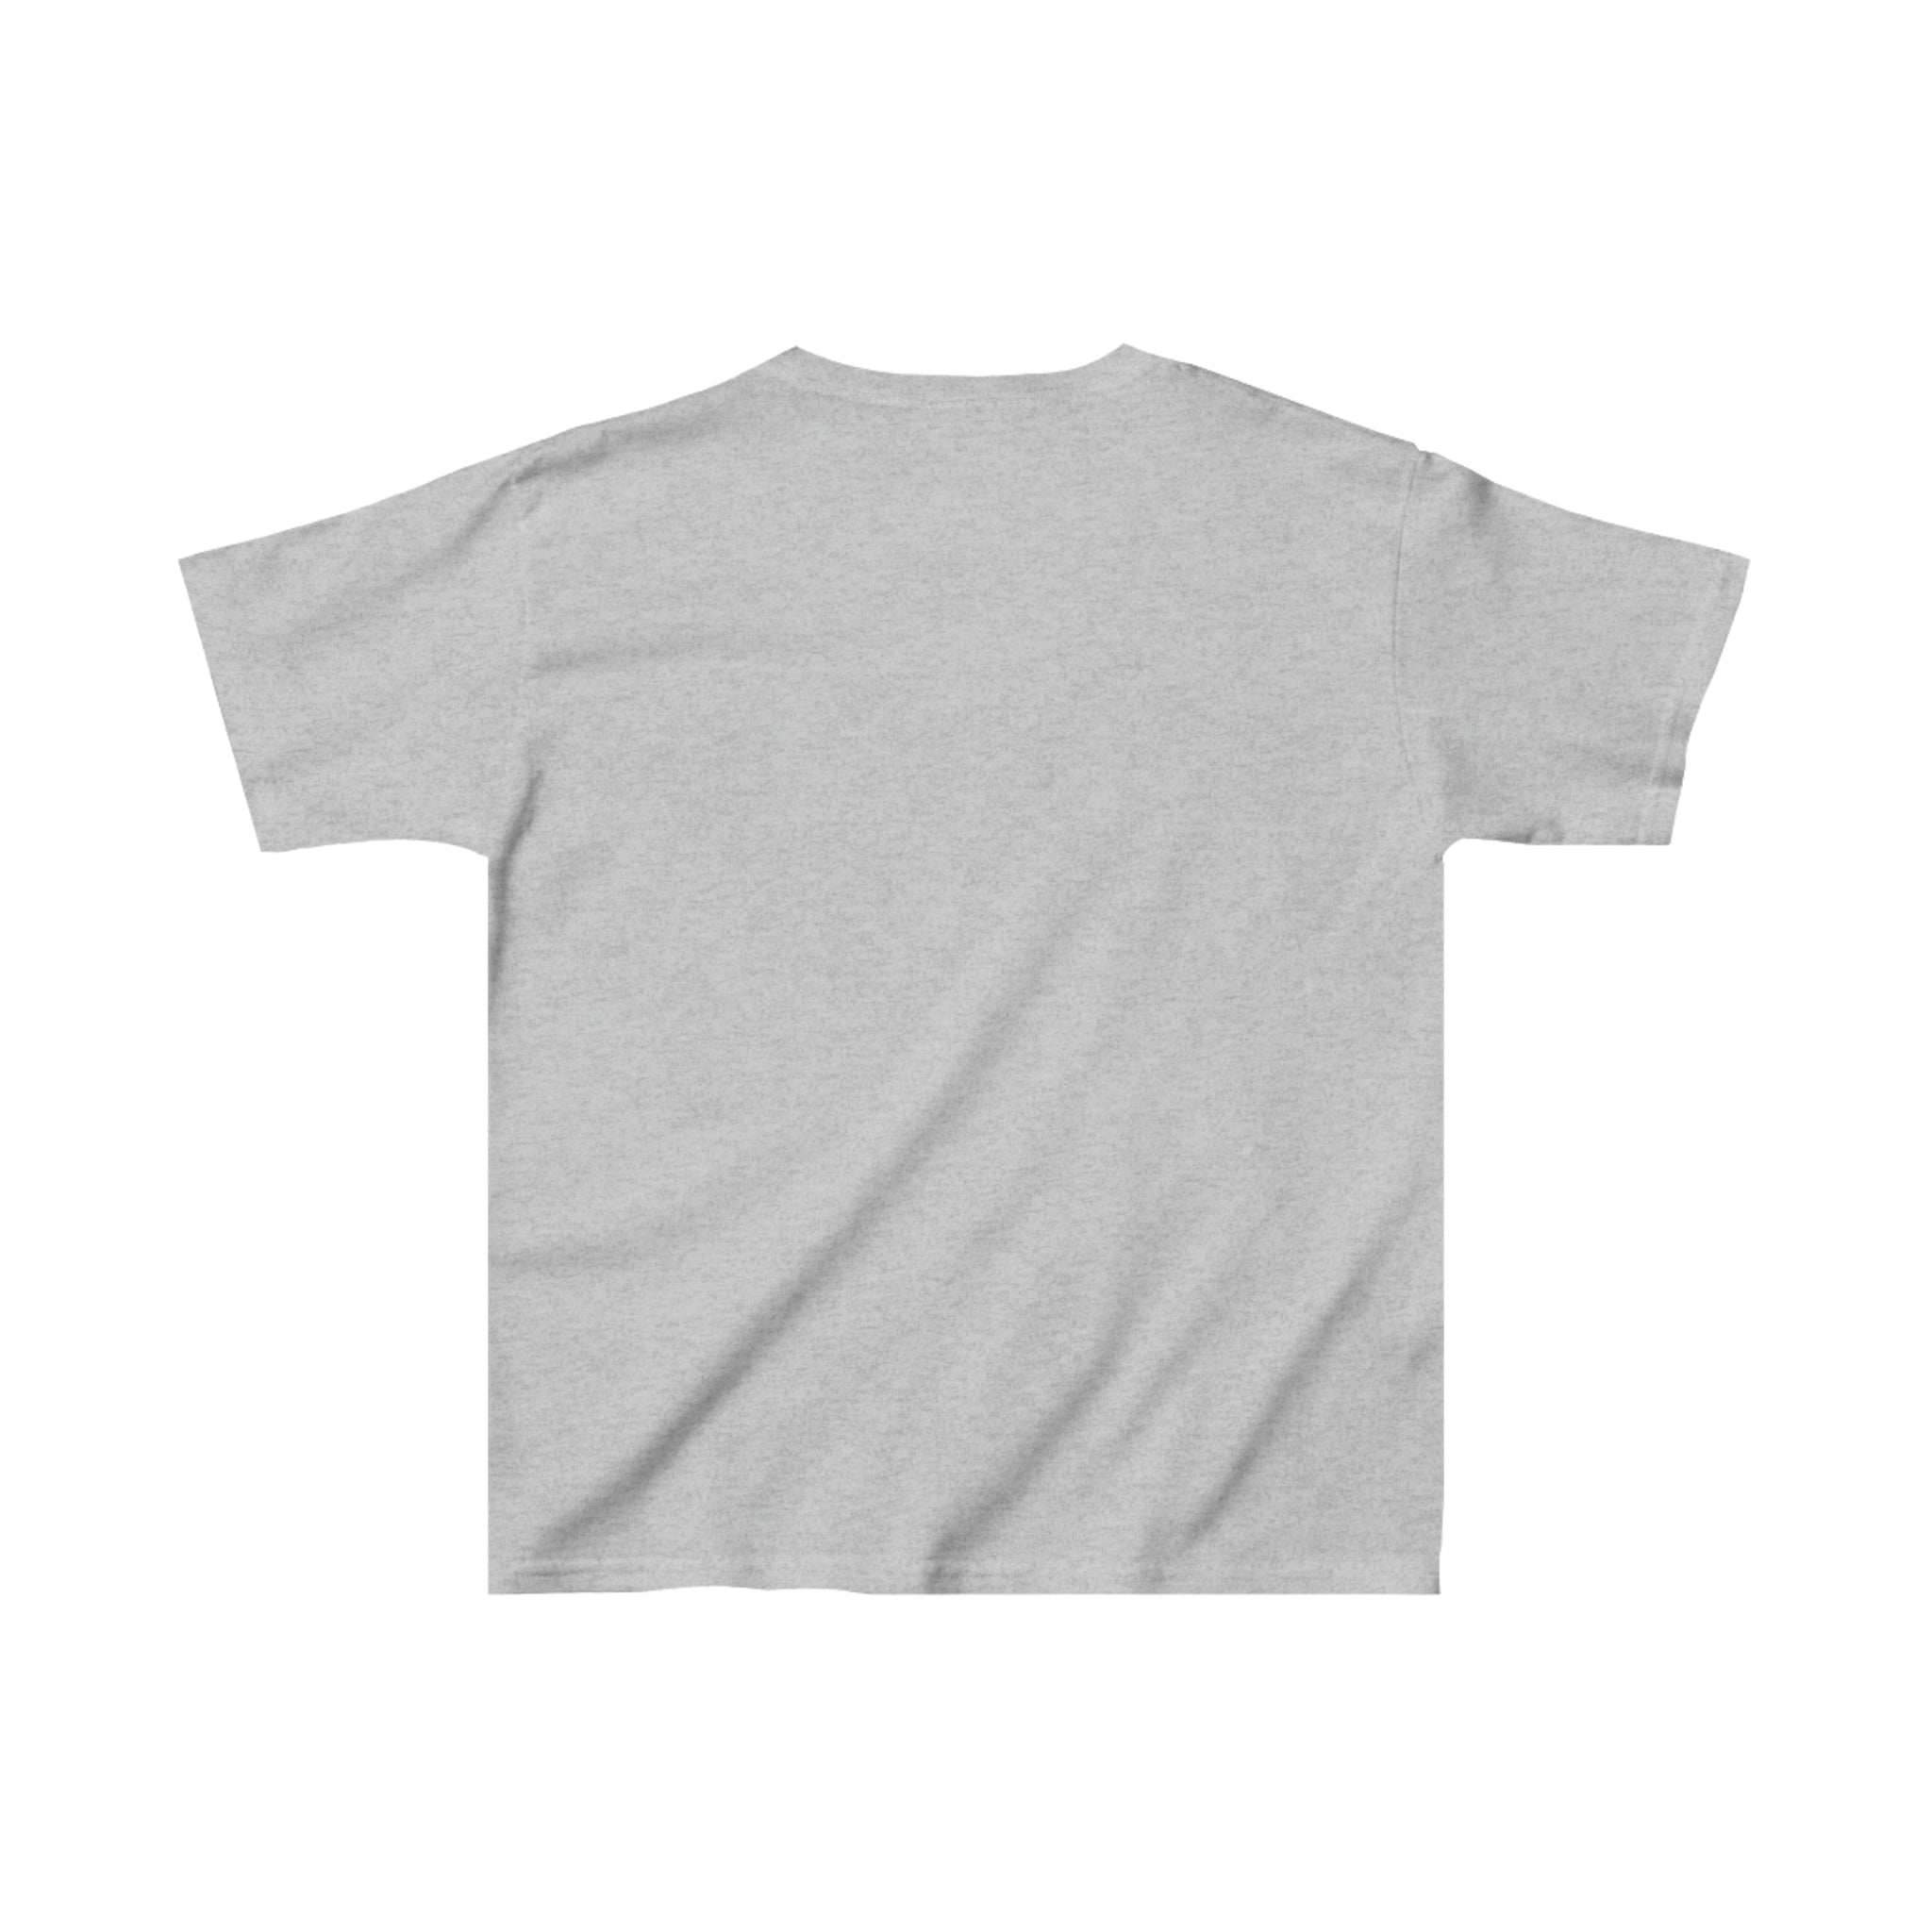 Abilene Aviators T-Shirt (Youth)